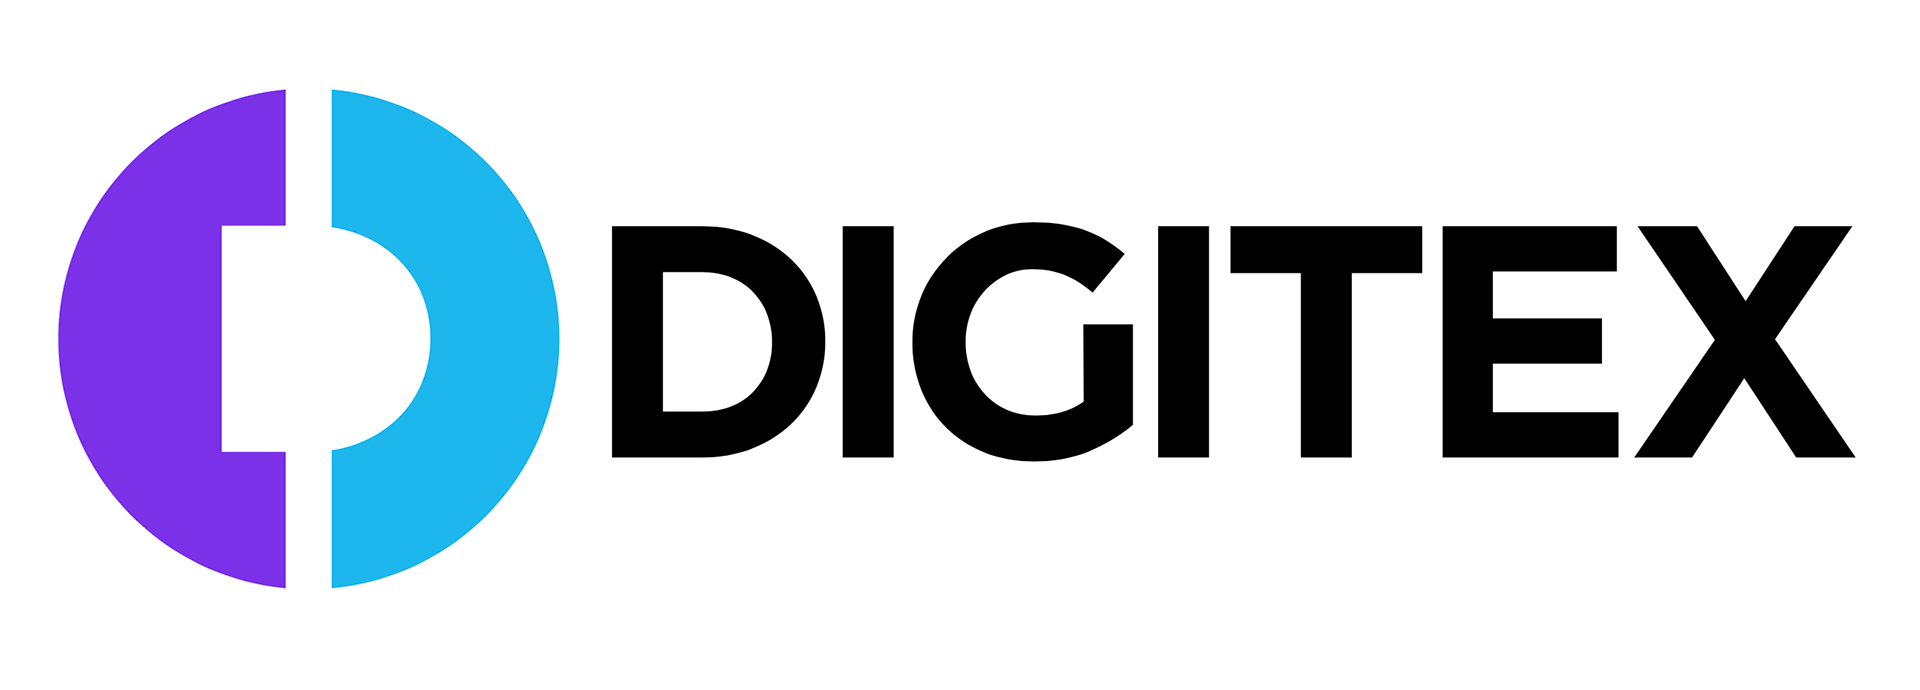 digitex